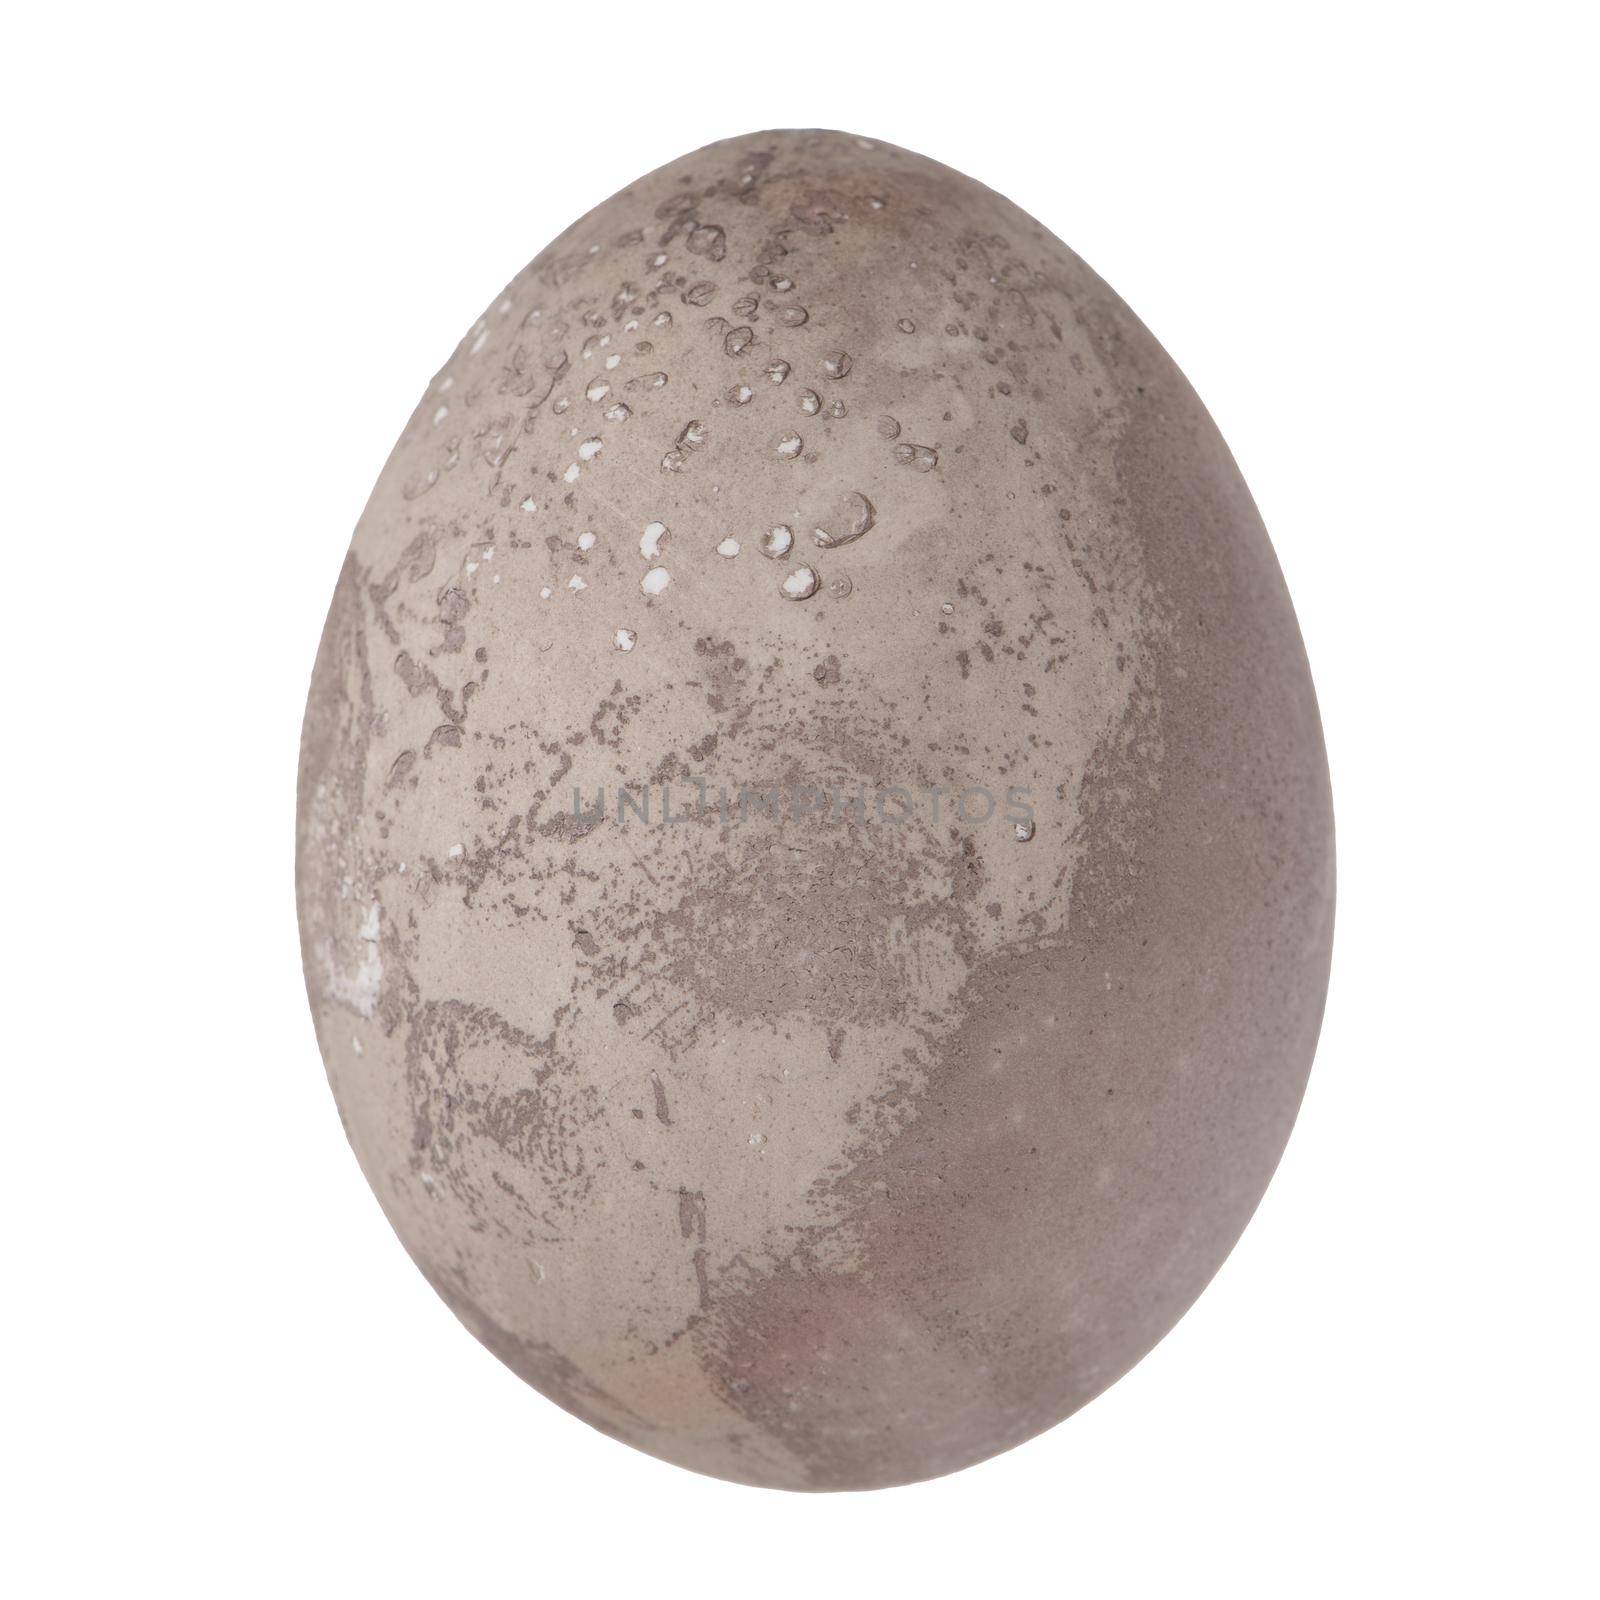 Grey painted egg isolated on white background.